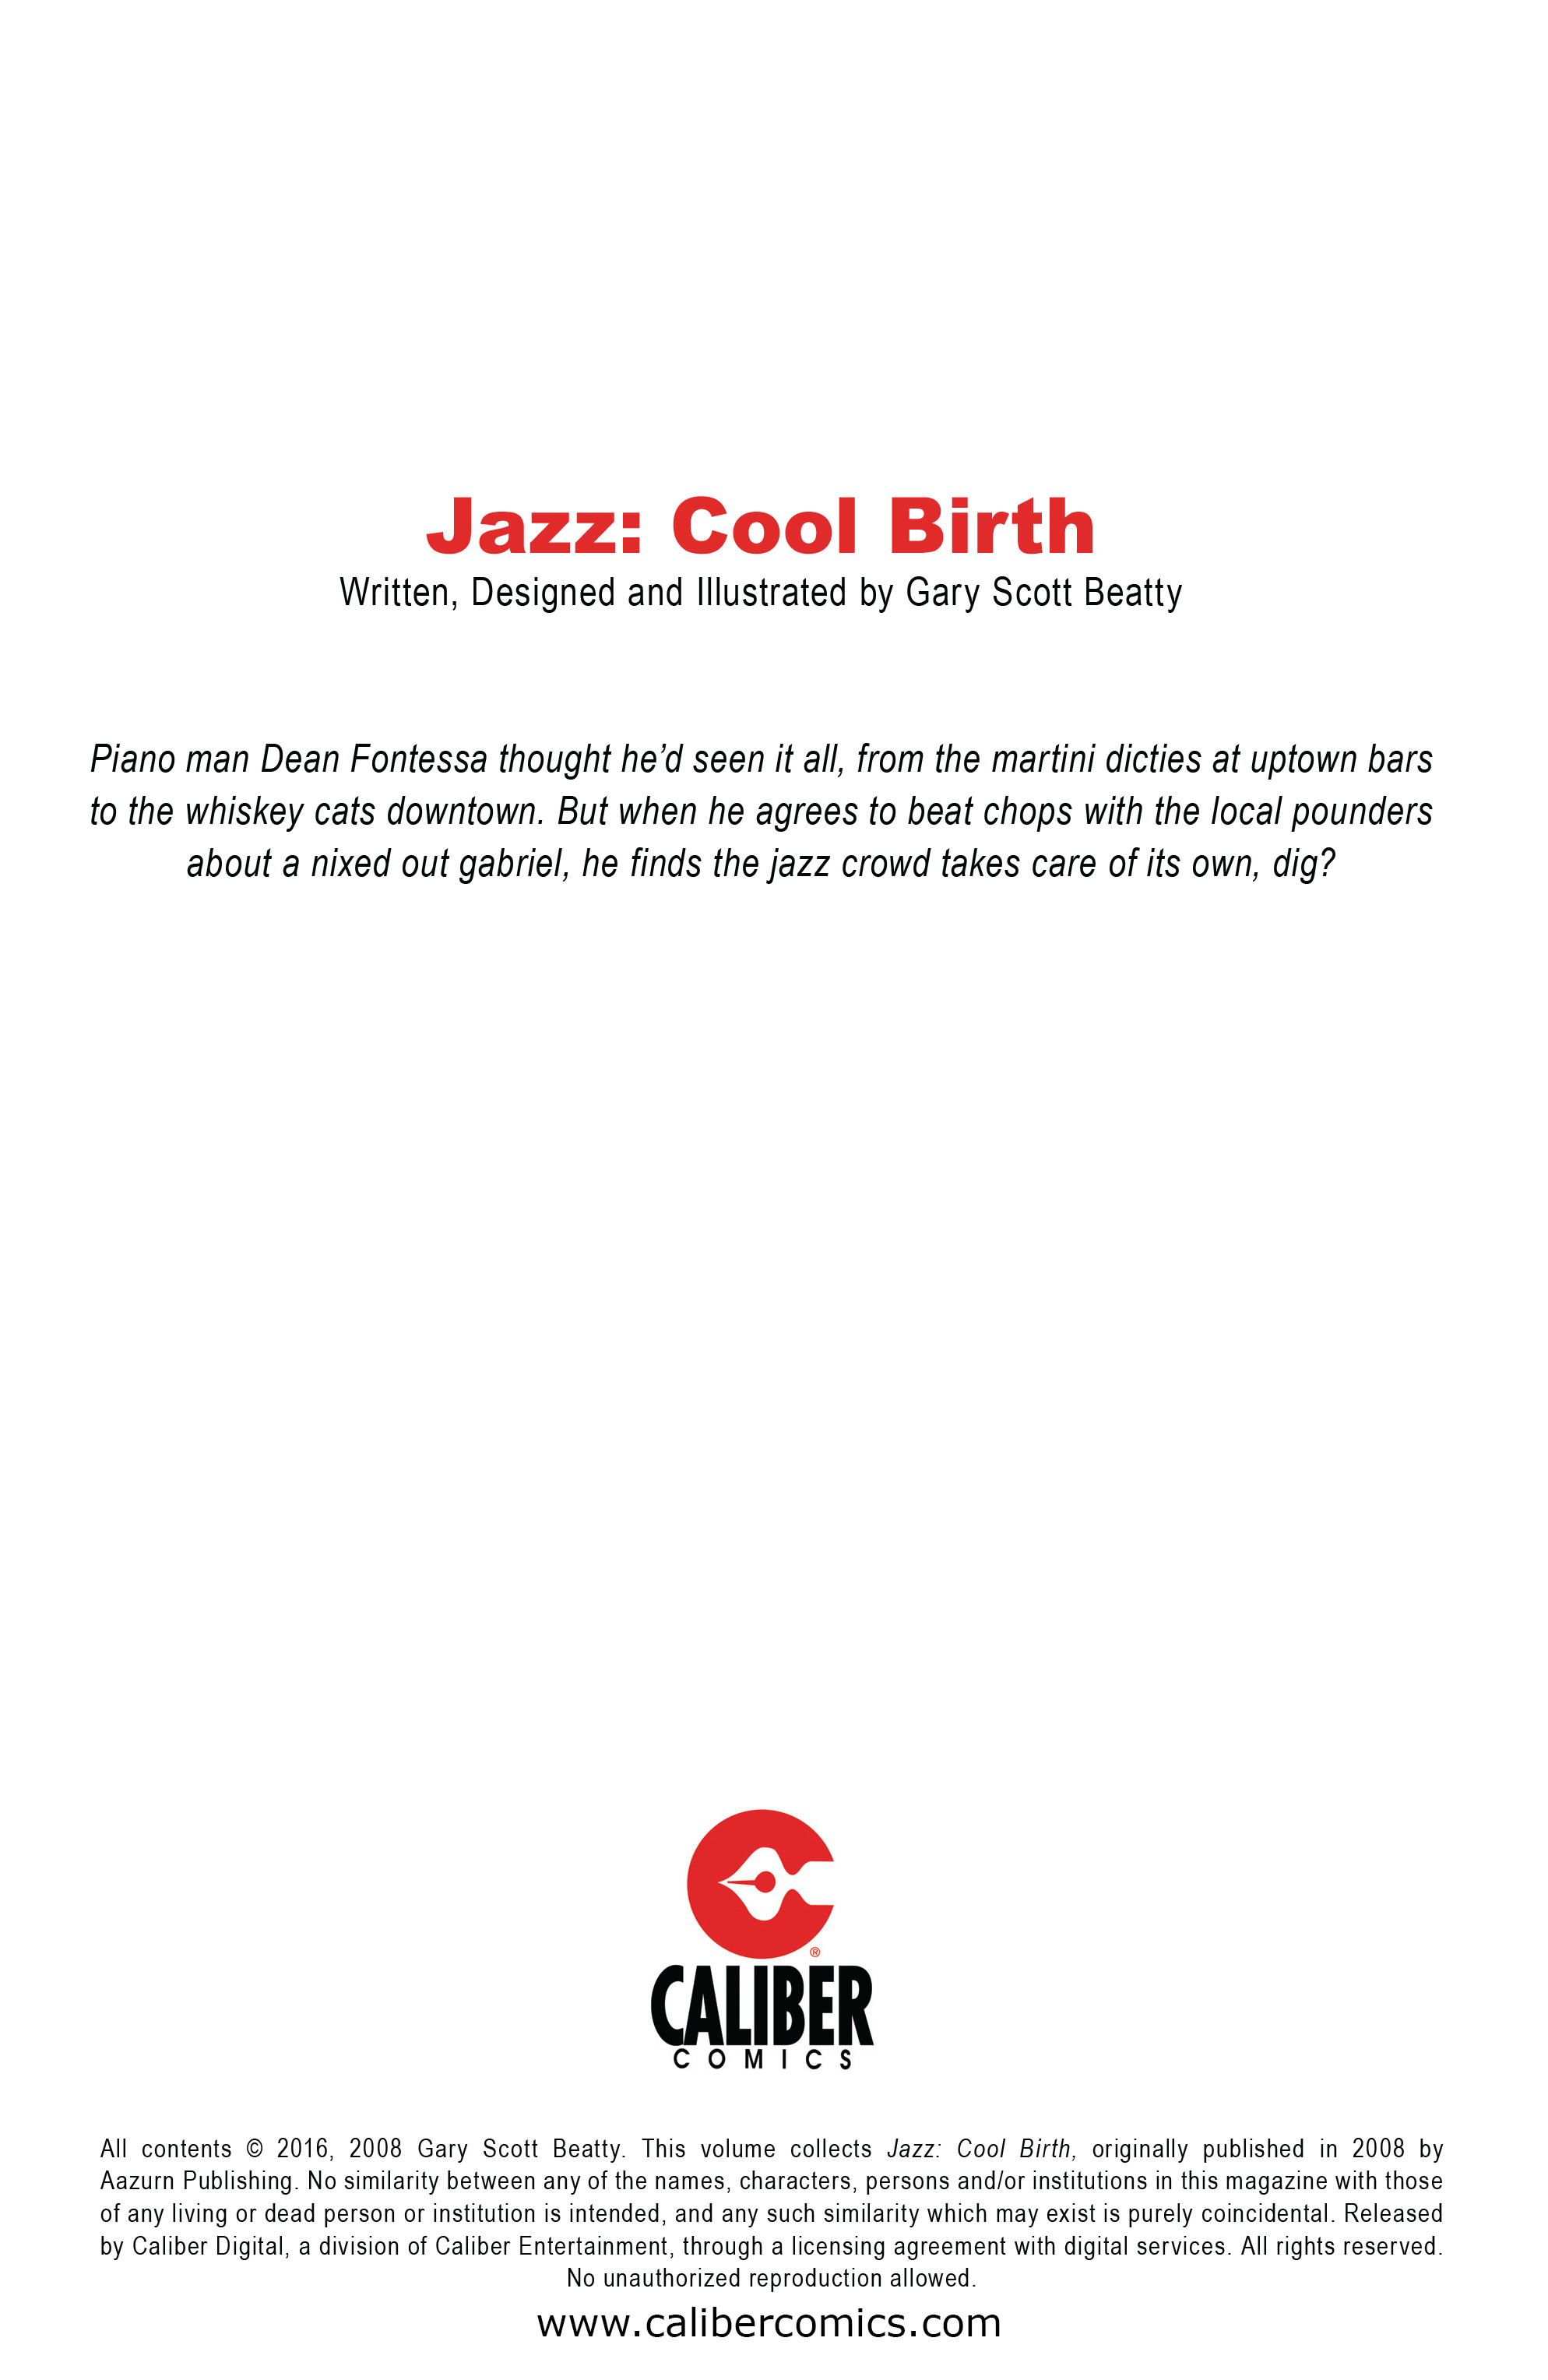 Read online Jazz: Cool Birth comic -  Issue #1 - 2